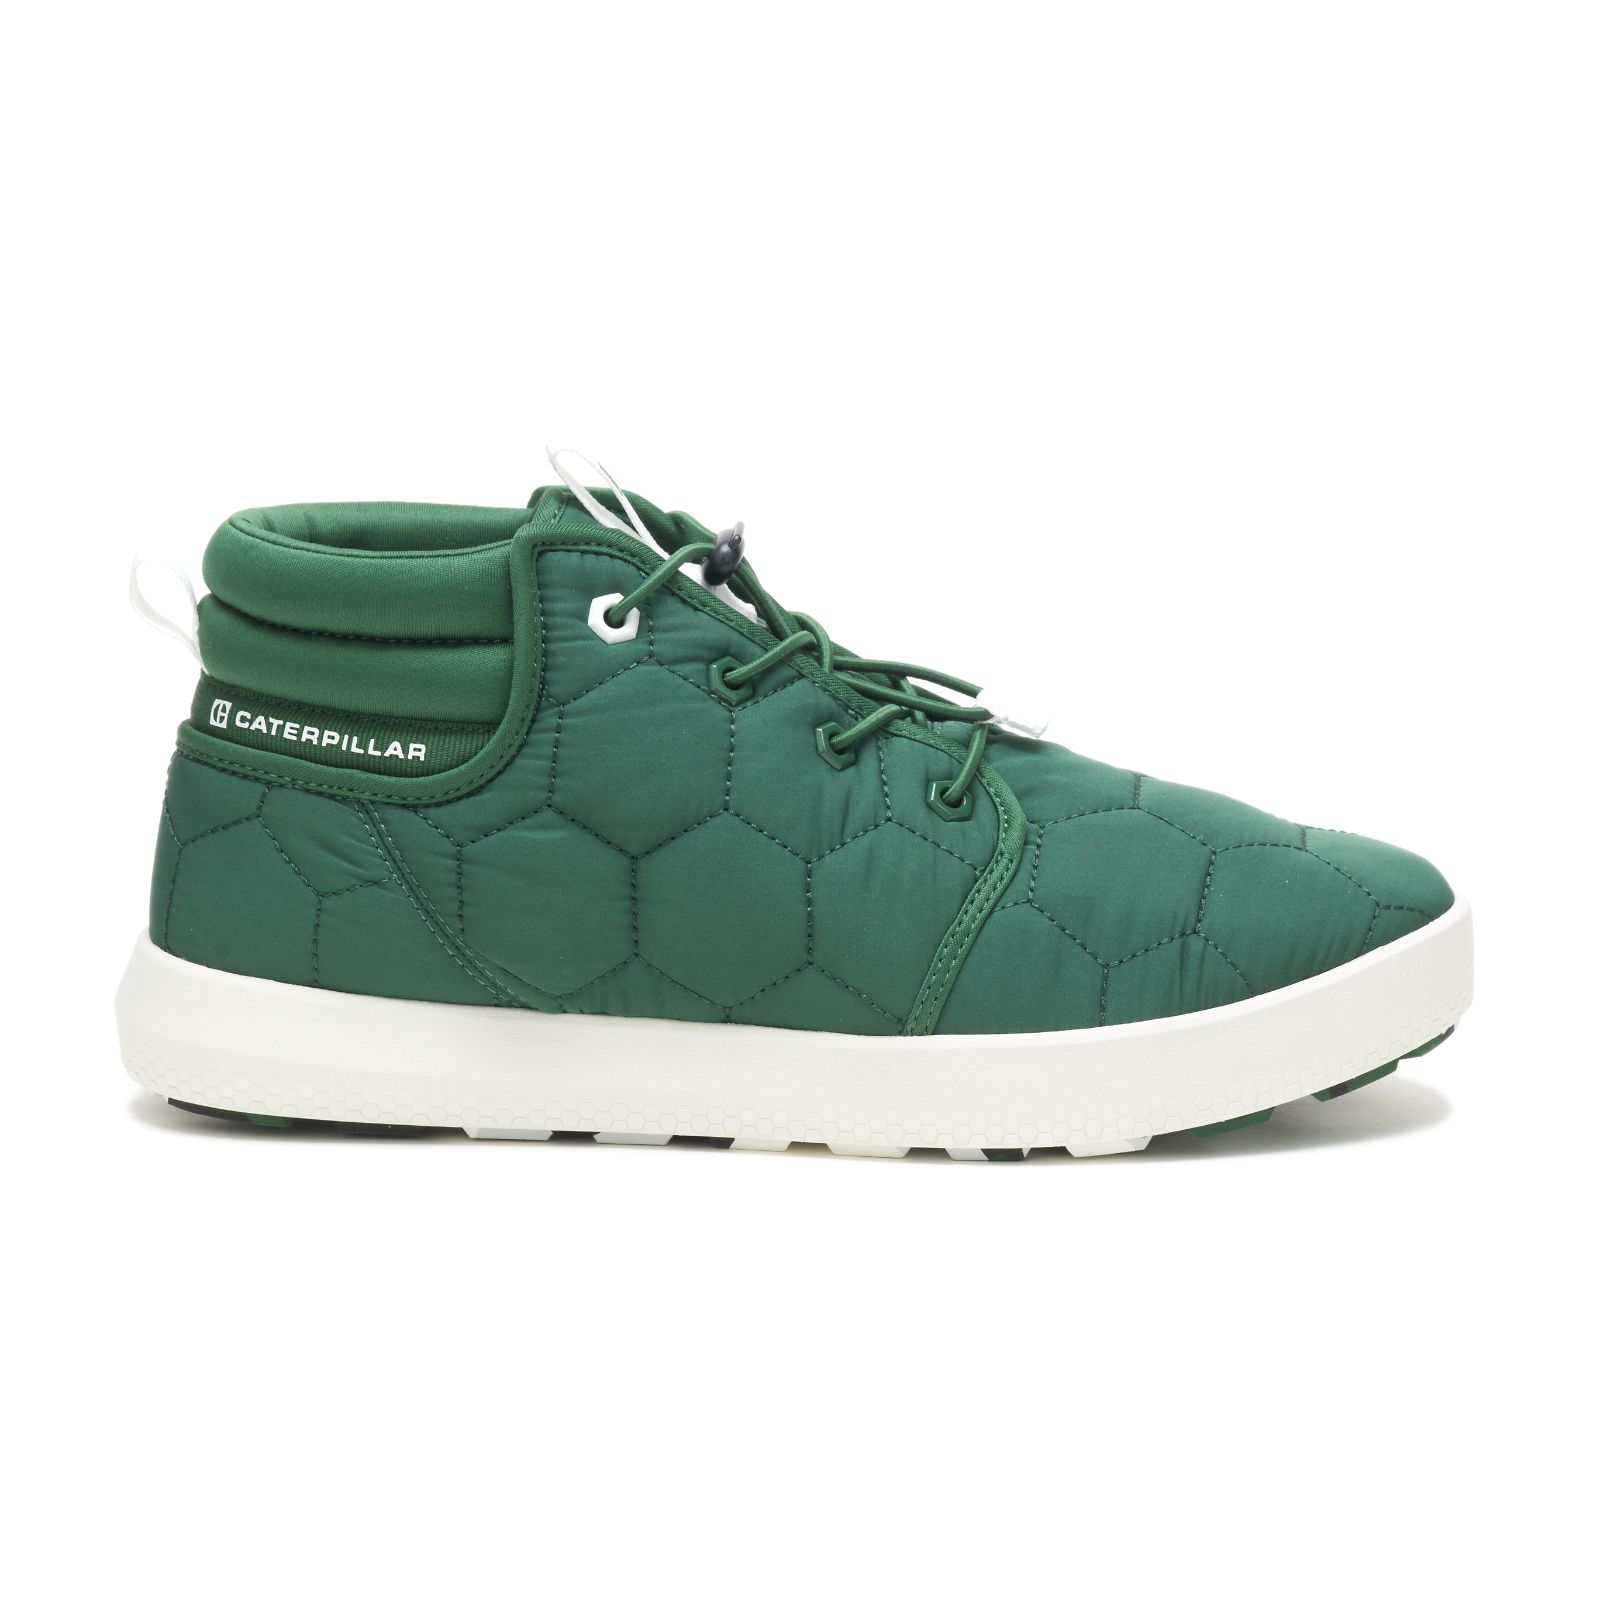 Caterpillar Sneakers UAE - Caterpillar Code Scout Mid Mens - Green WHPNDO519